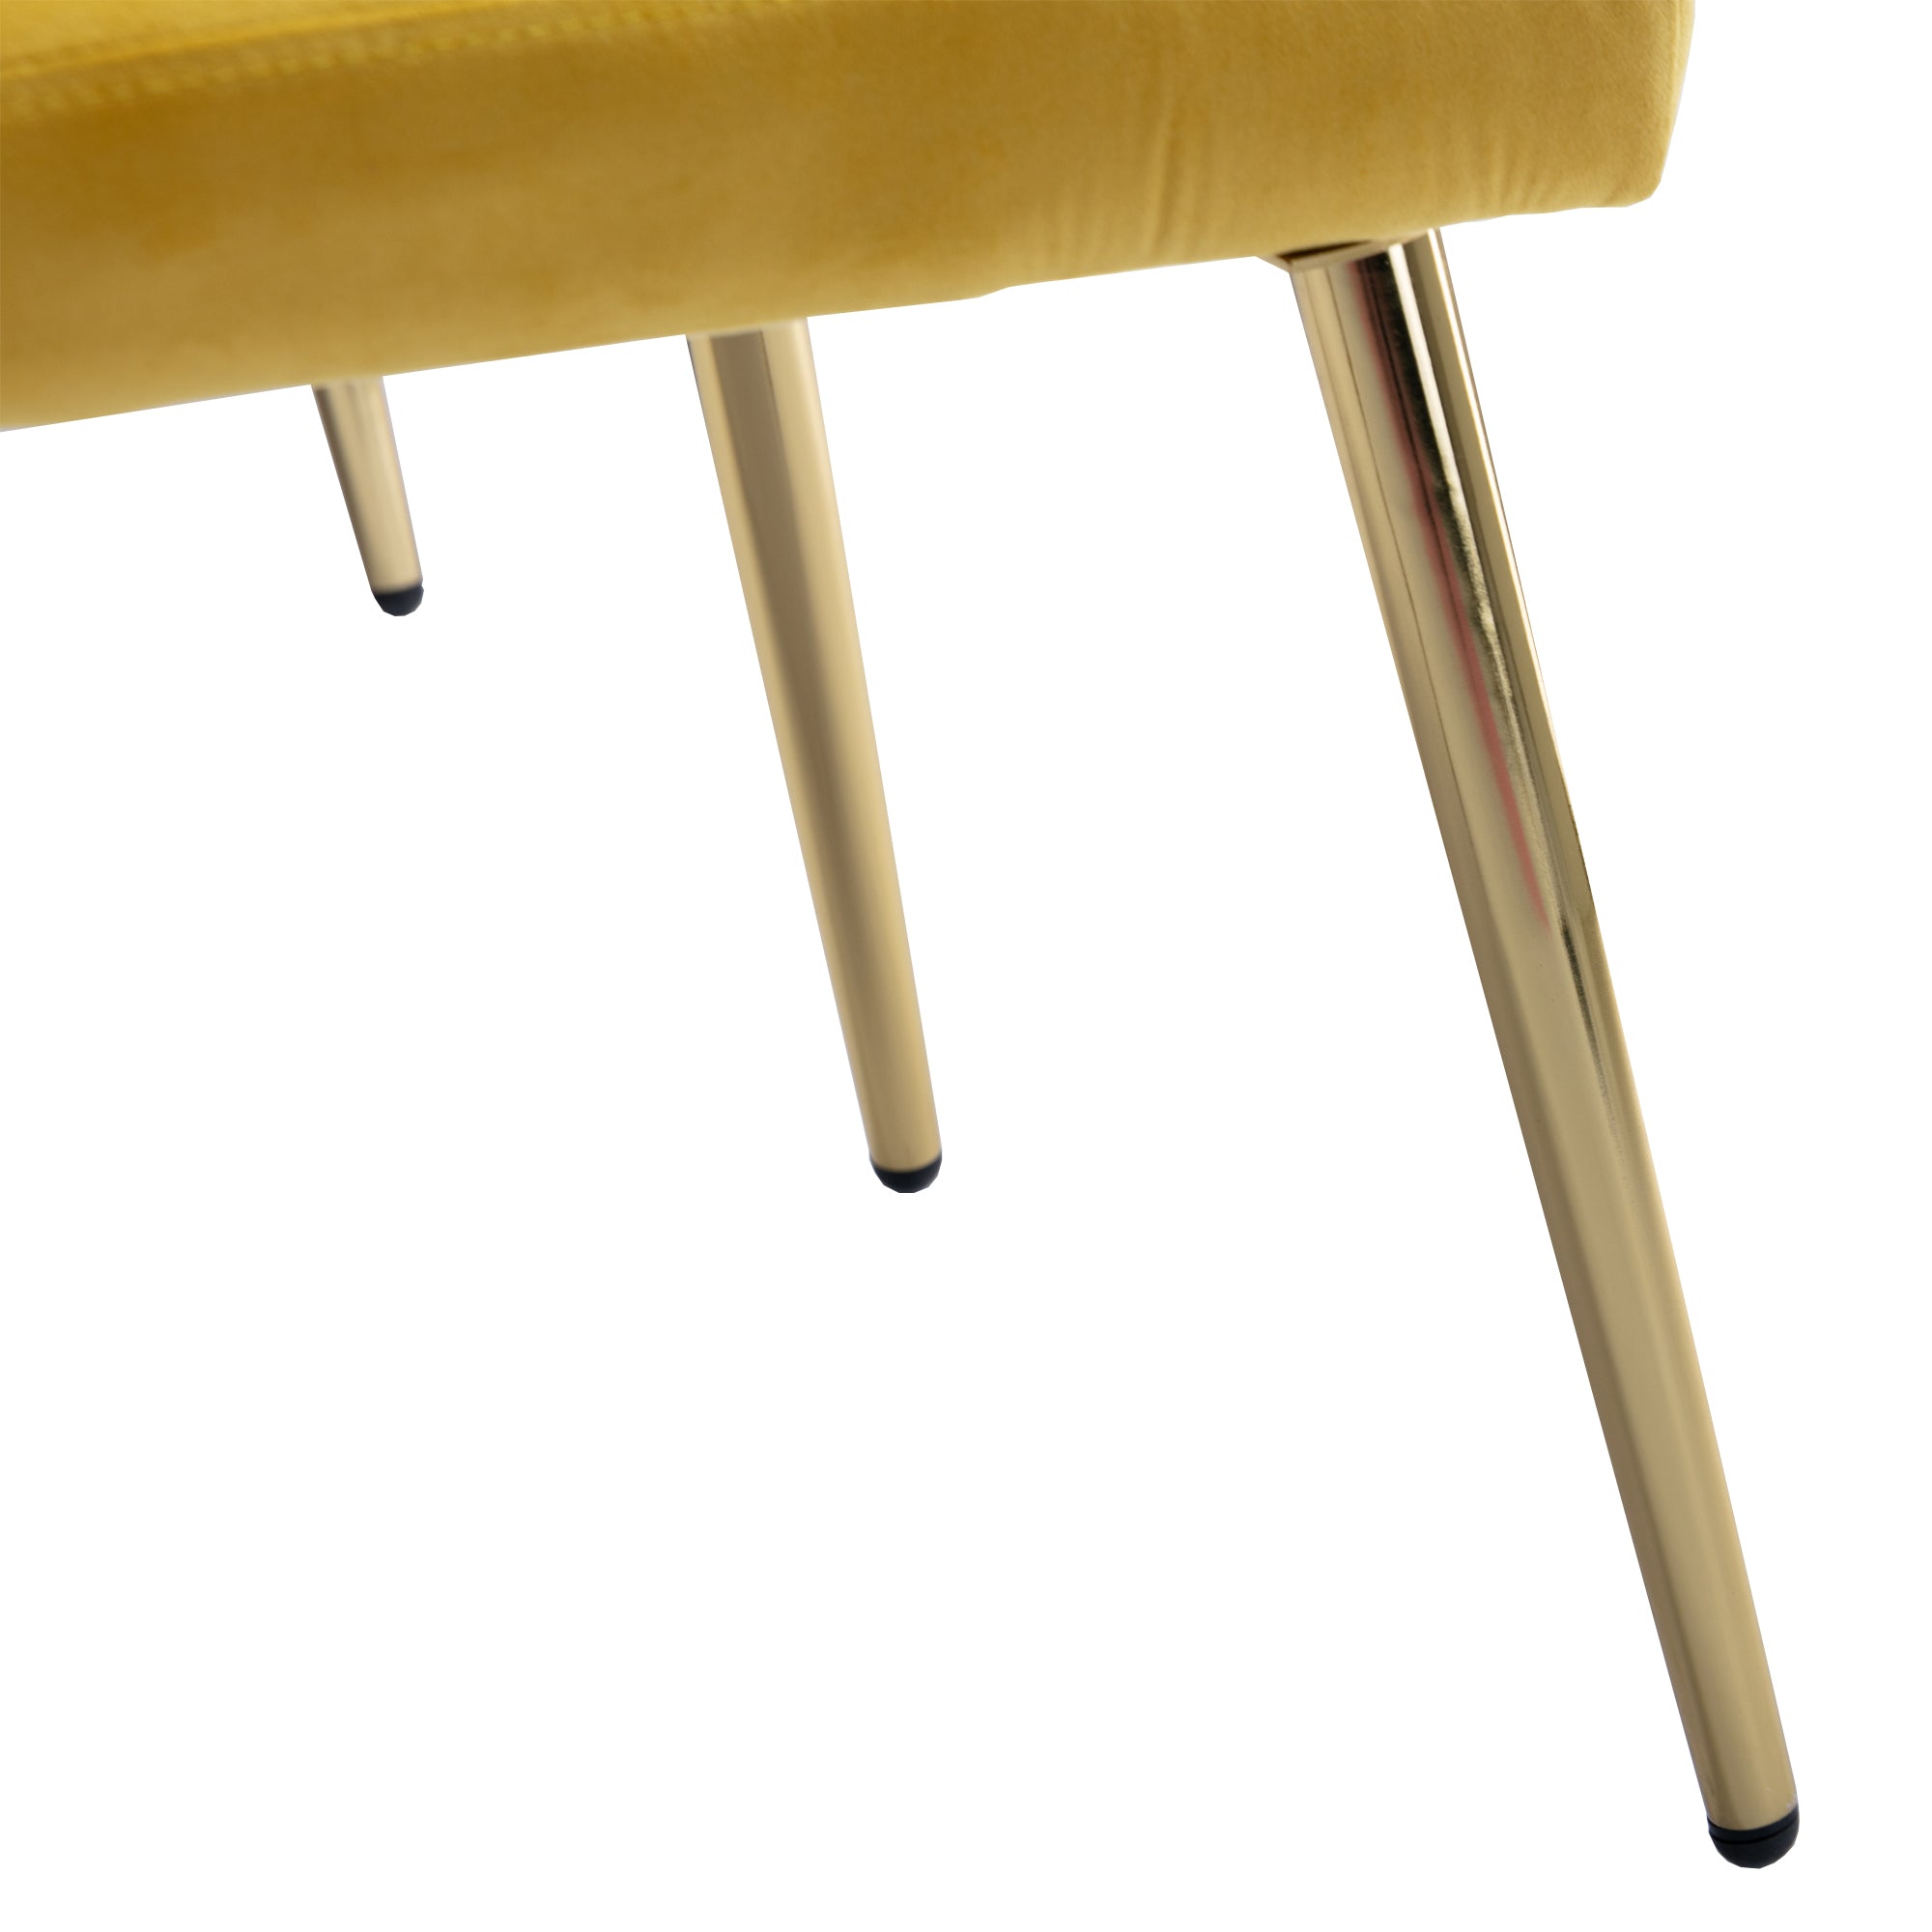 COOLMORE Velvet Accent Chair with Adjustable Armrests mustard-metal